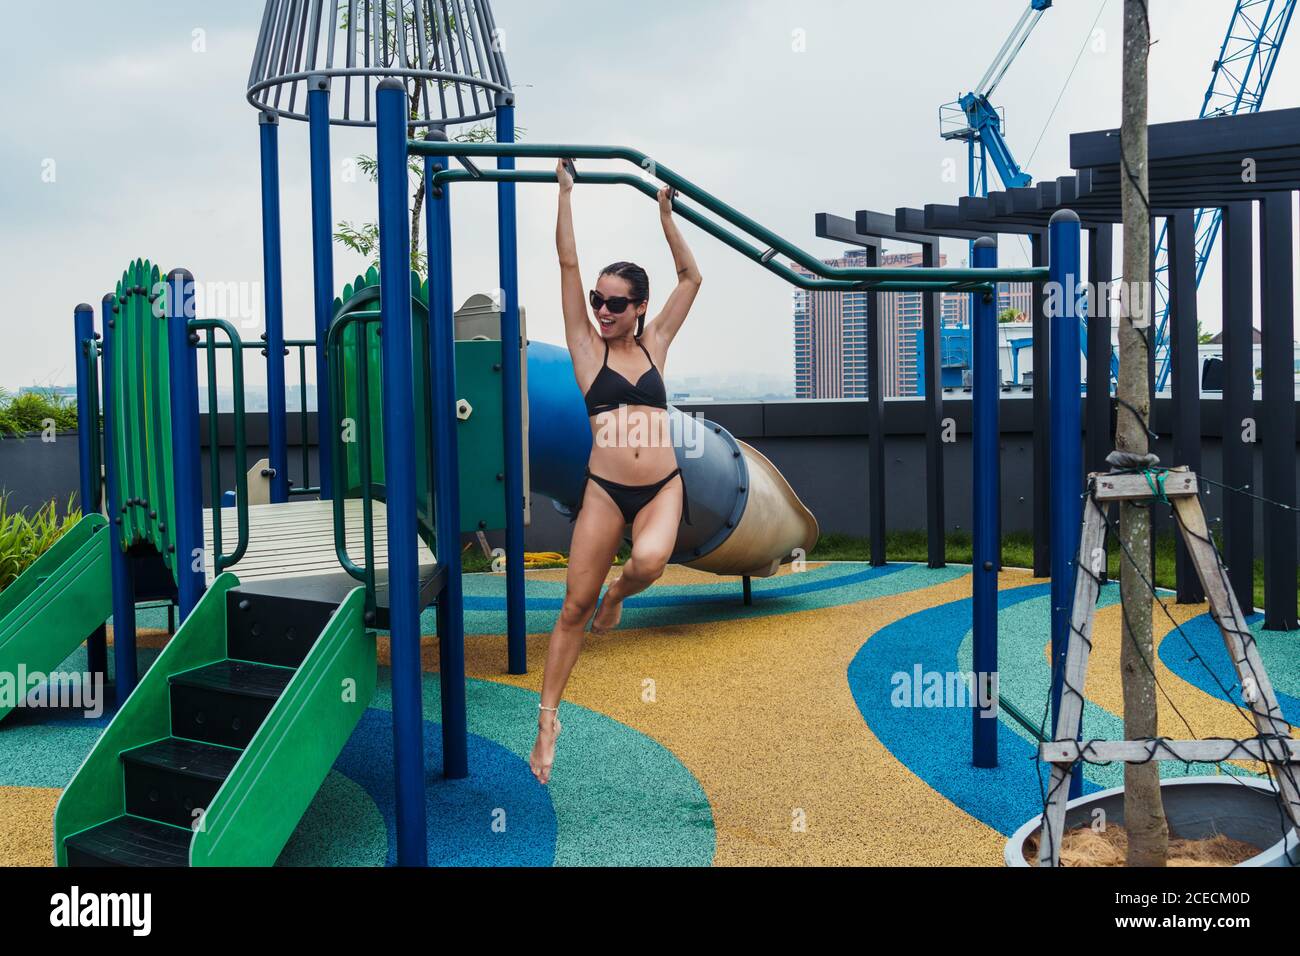 Teenager in bikini - Playground